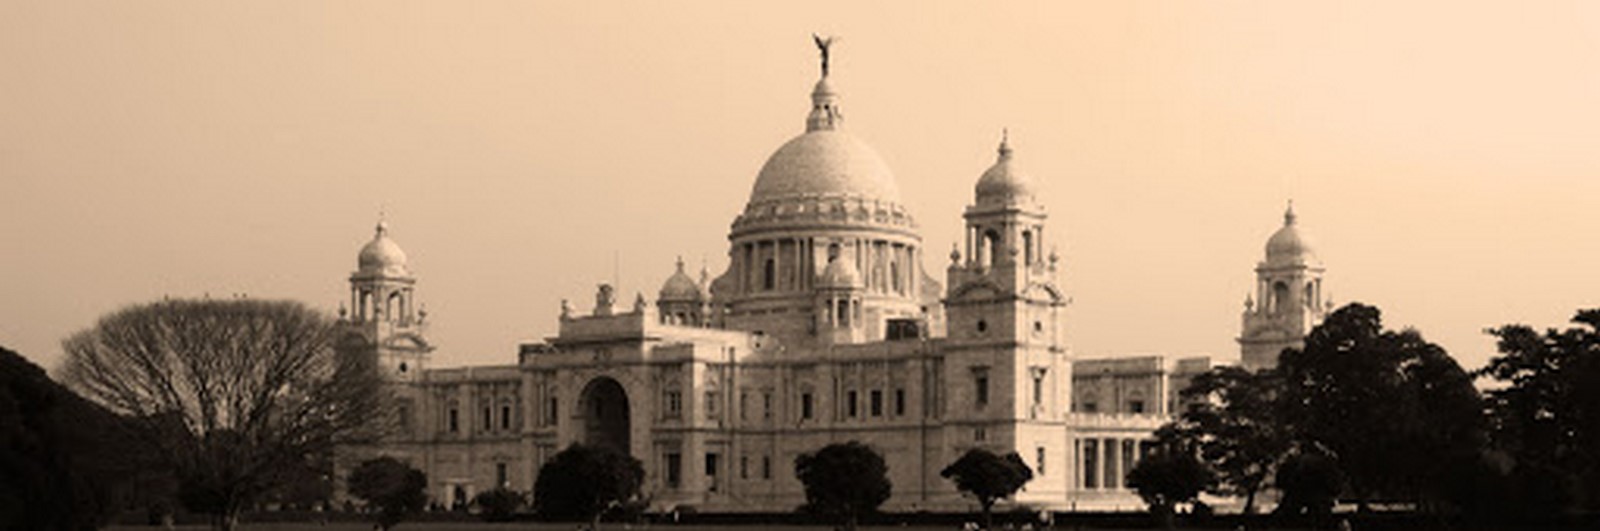 Victoria Memorial, India - Sheet2